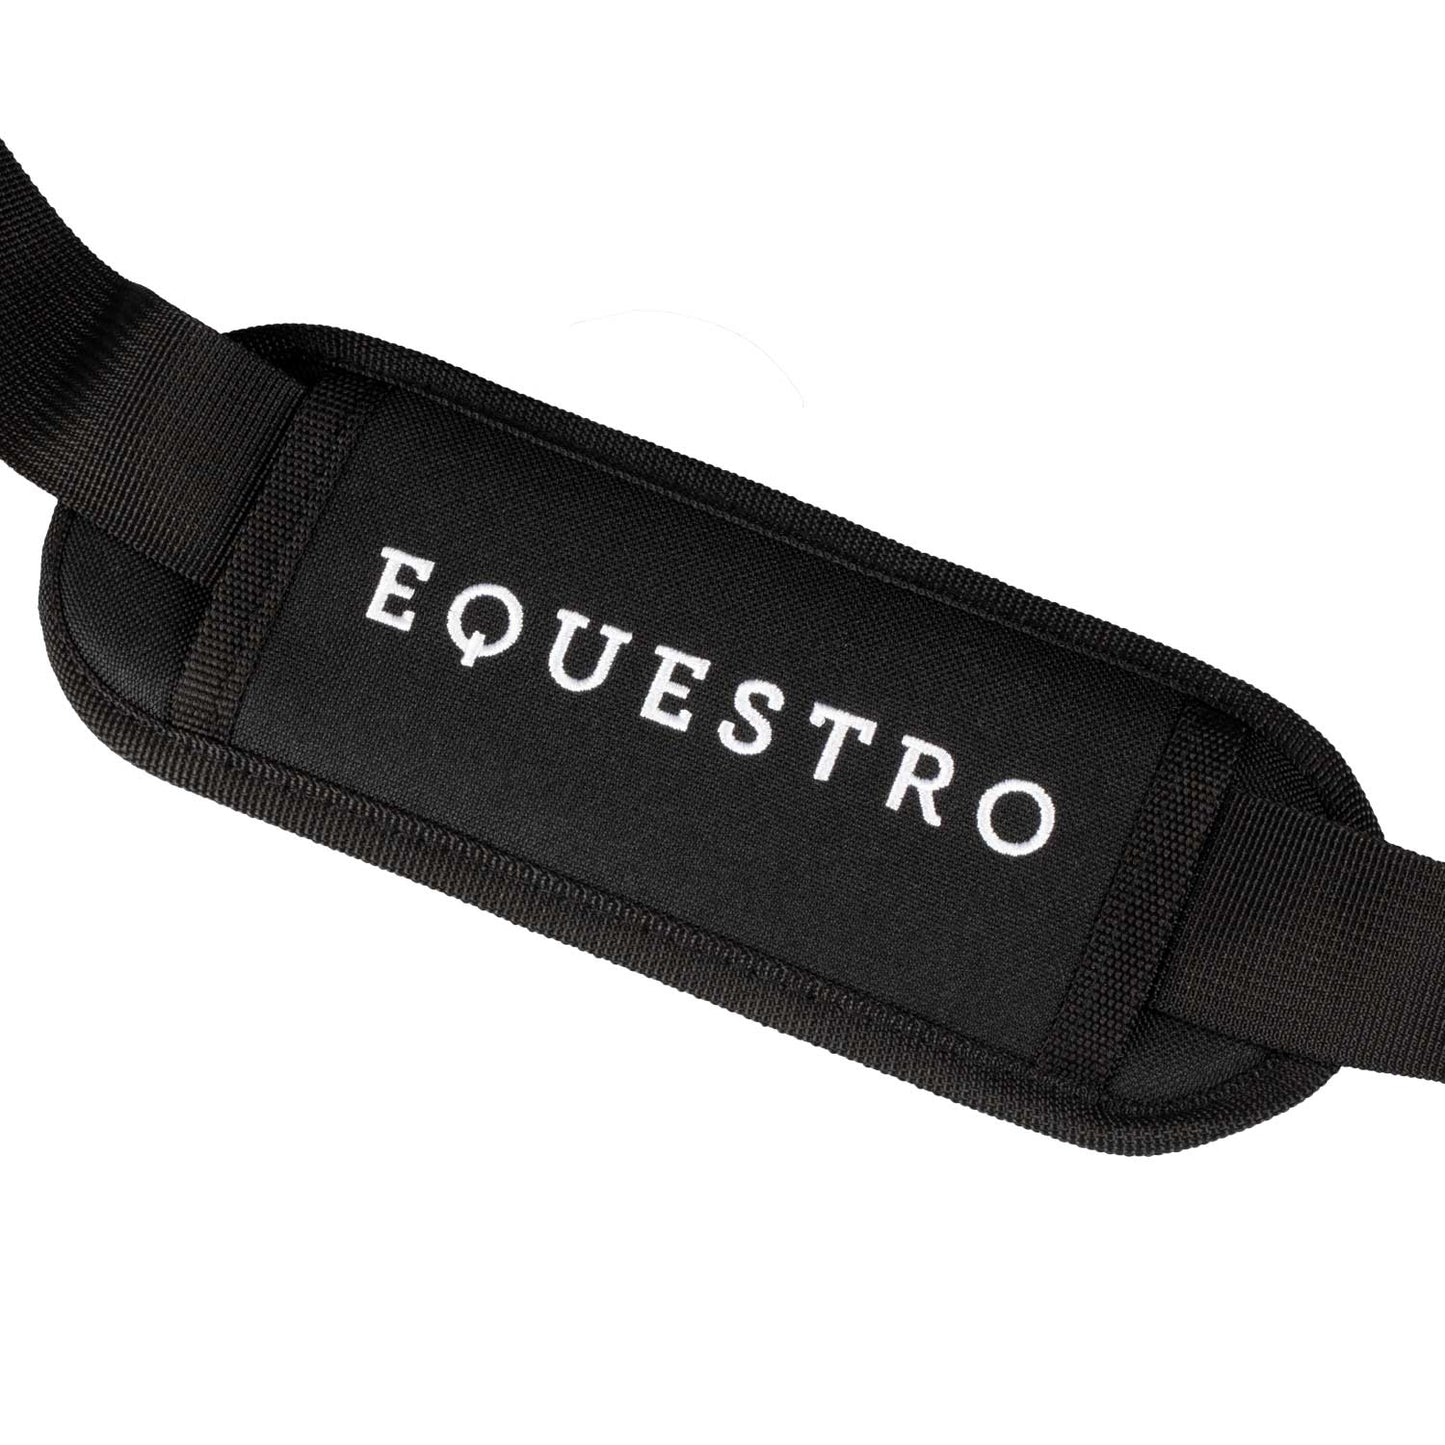 EQUESTRO - Grooming Bag